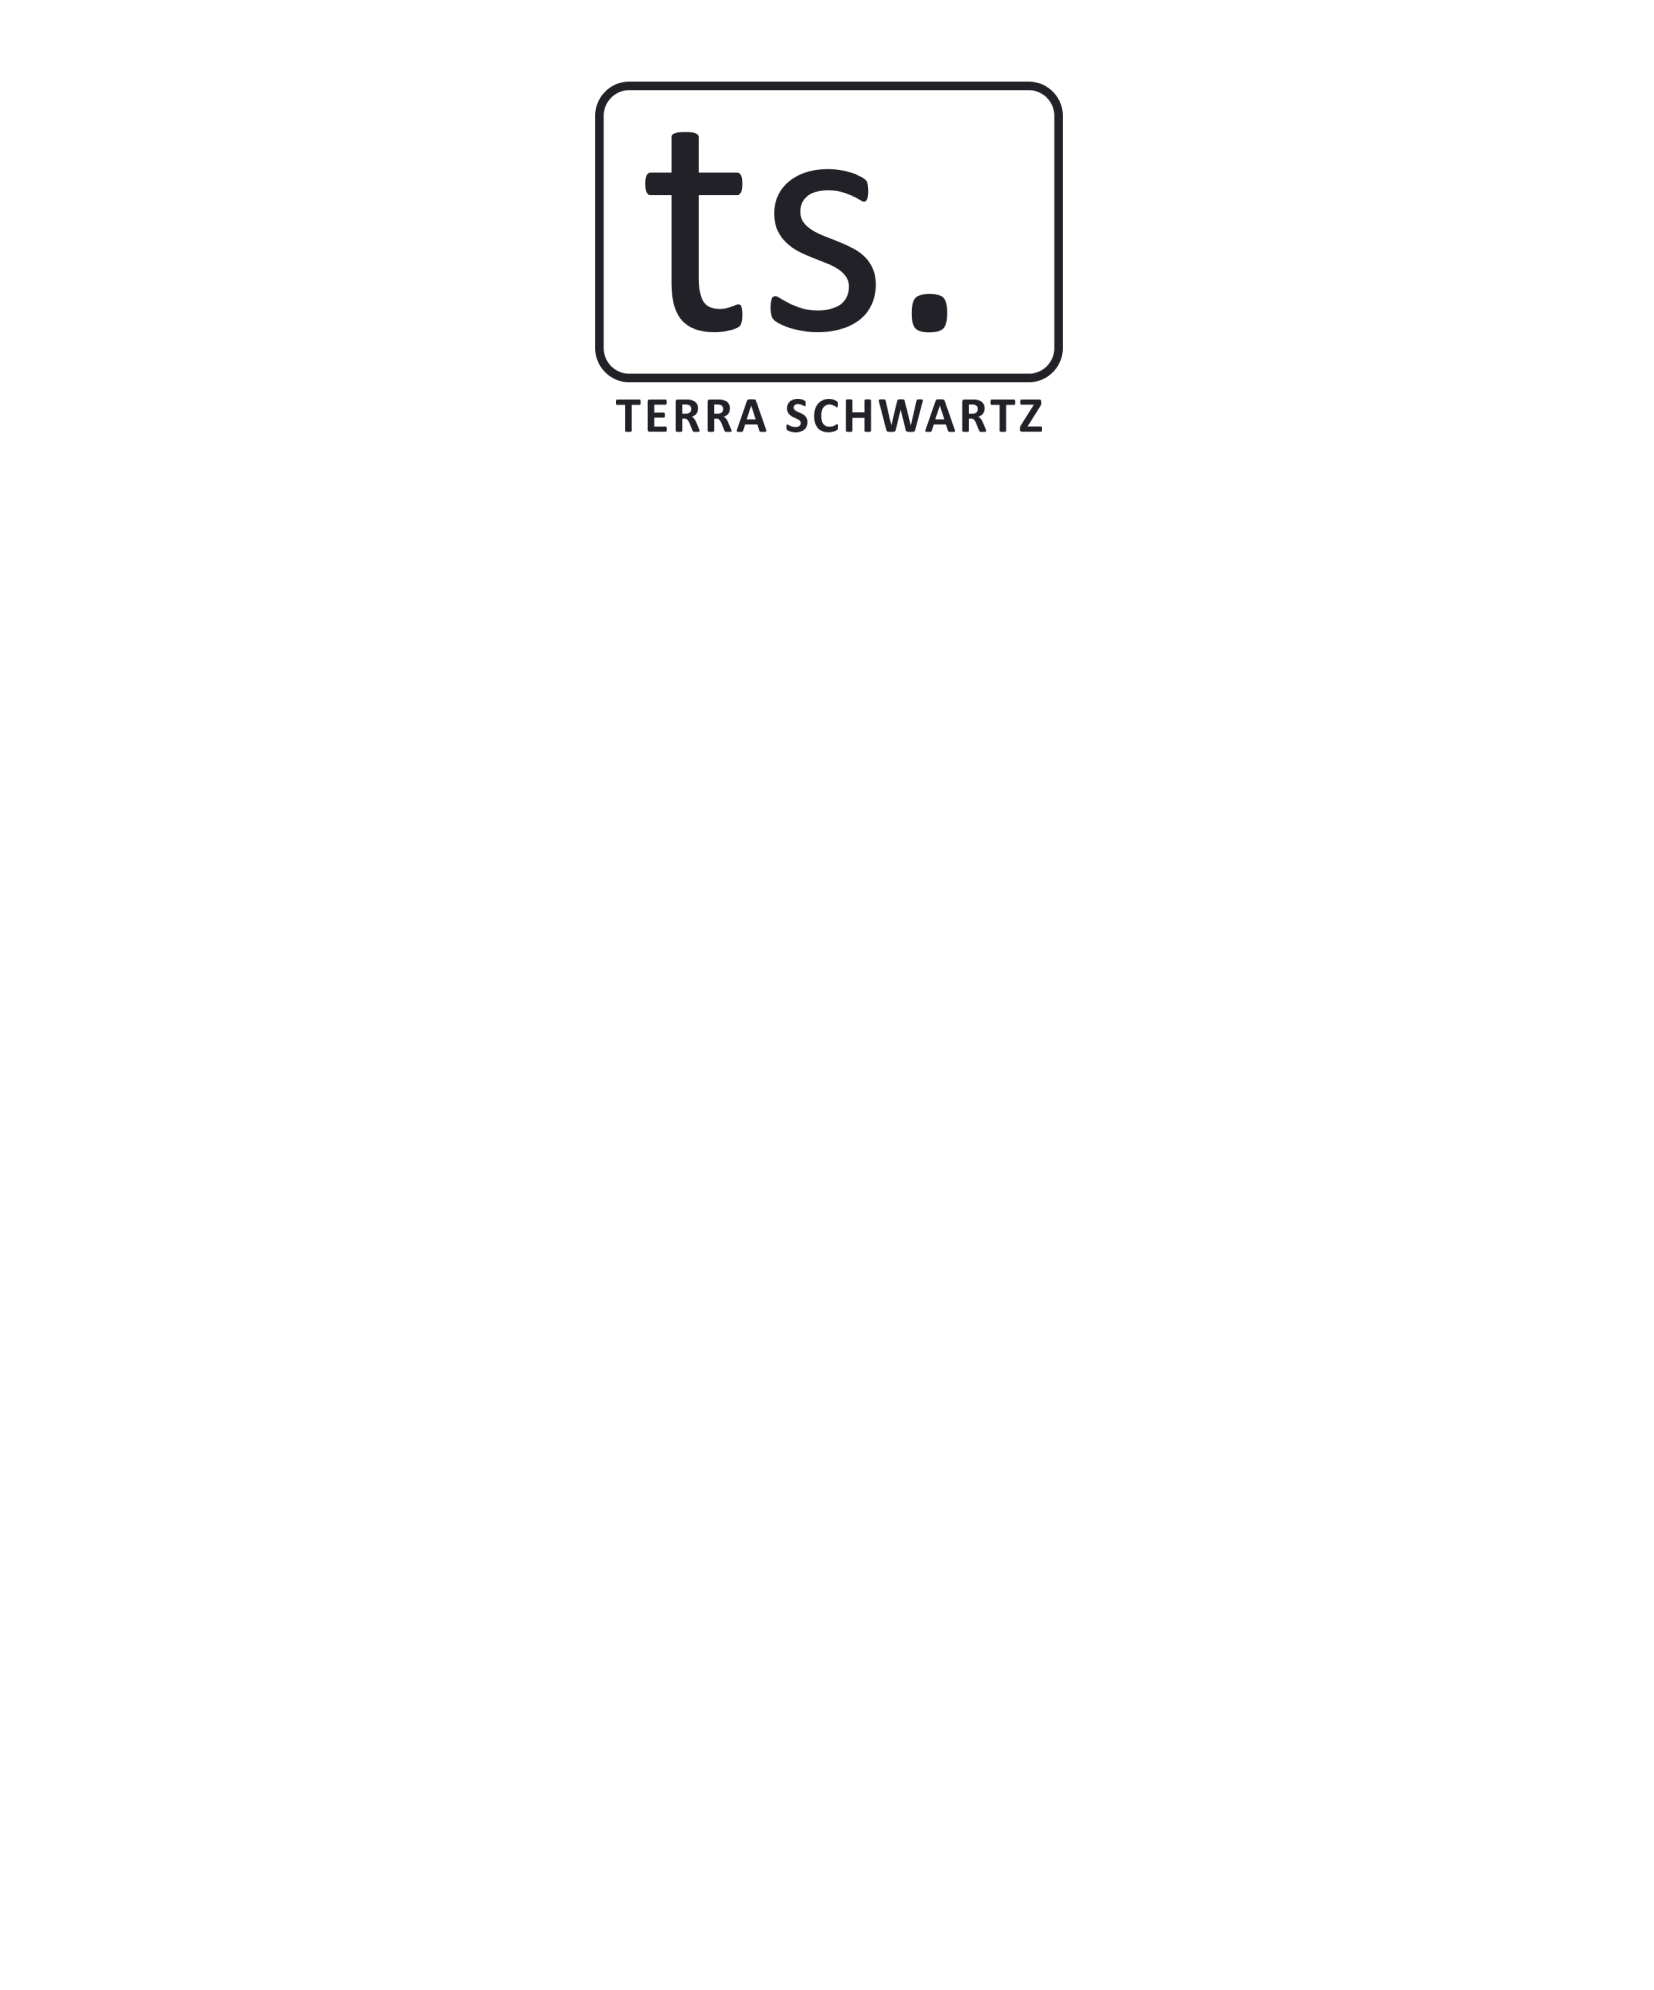 TS logo landing page